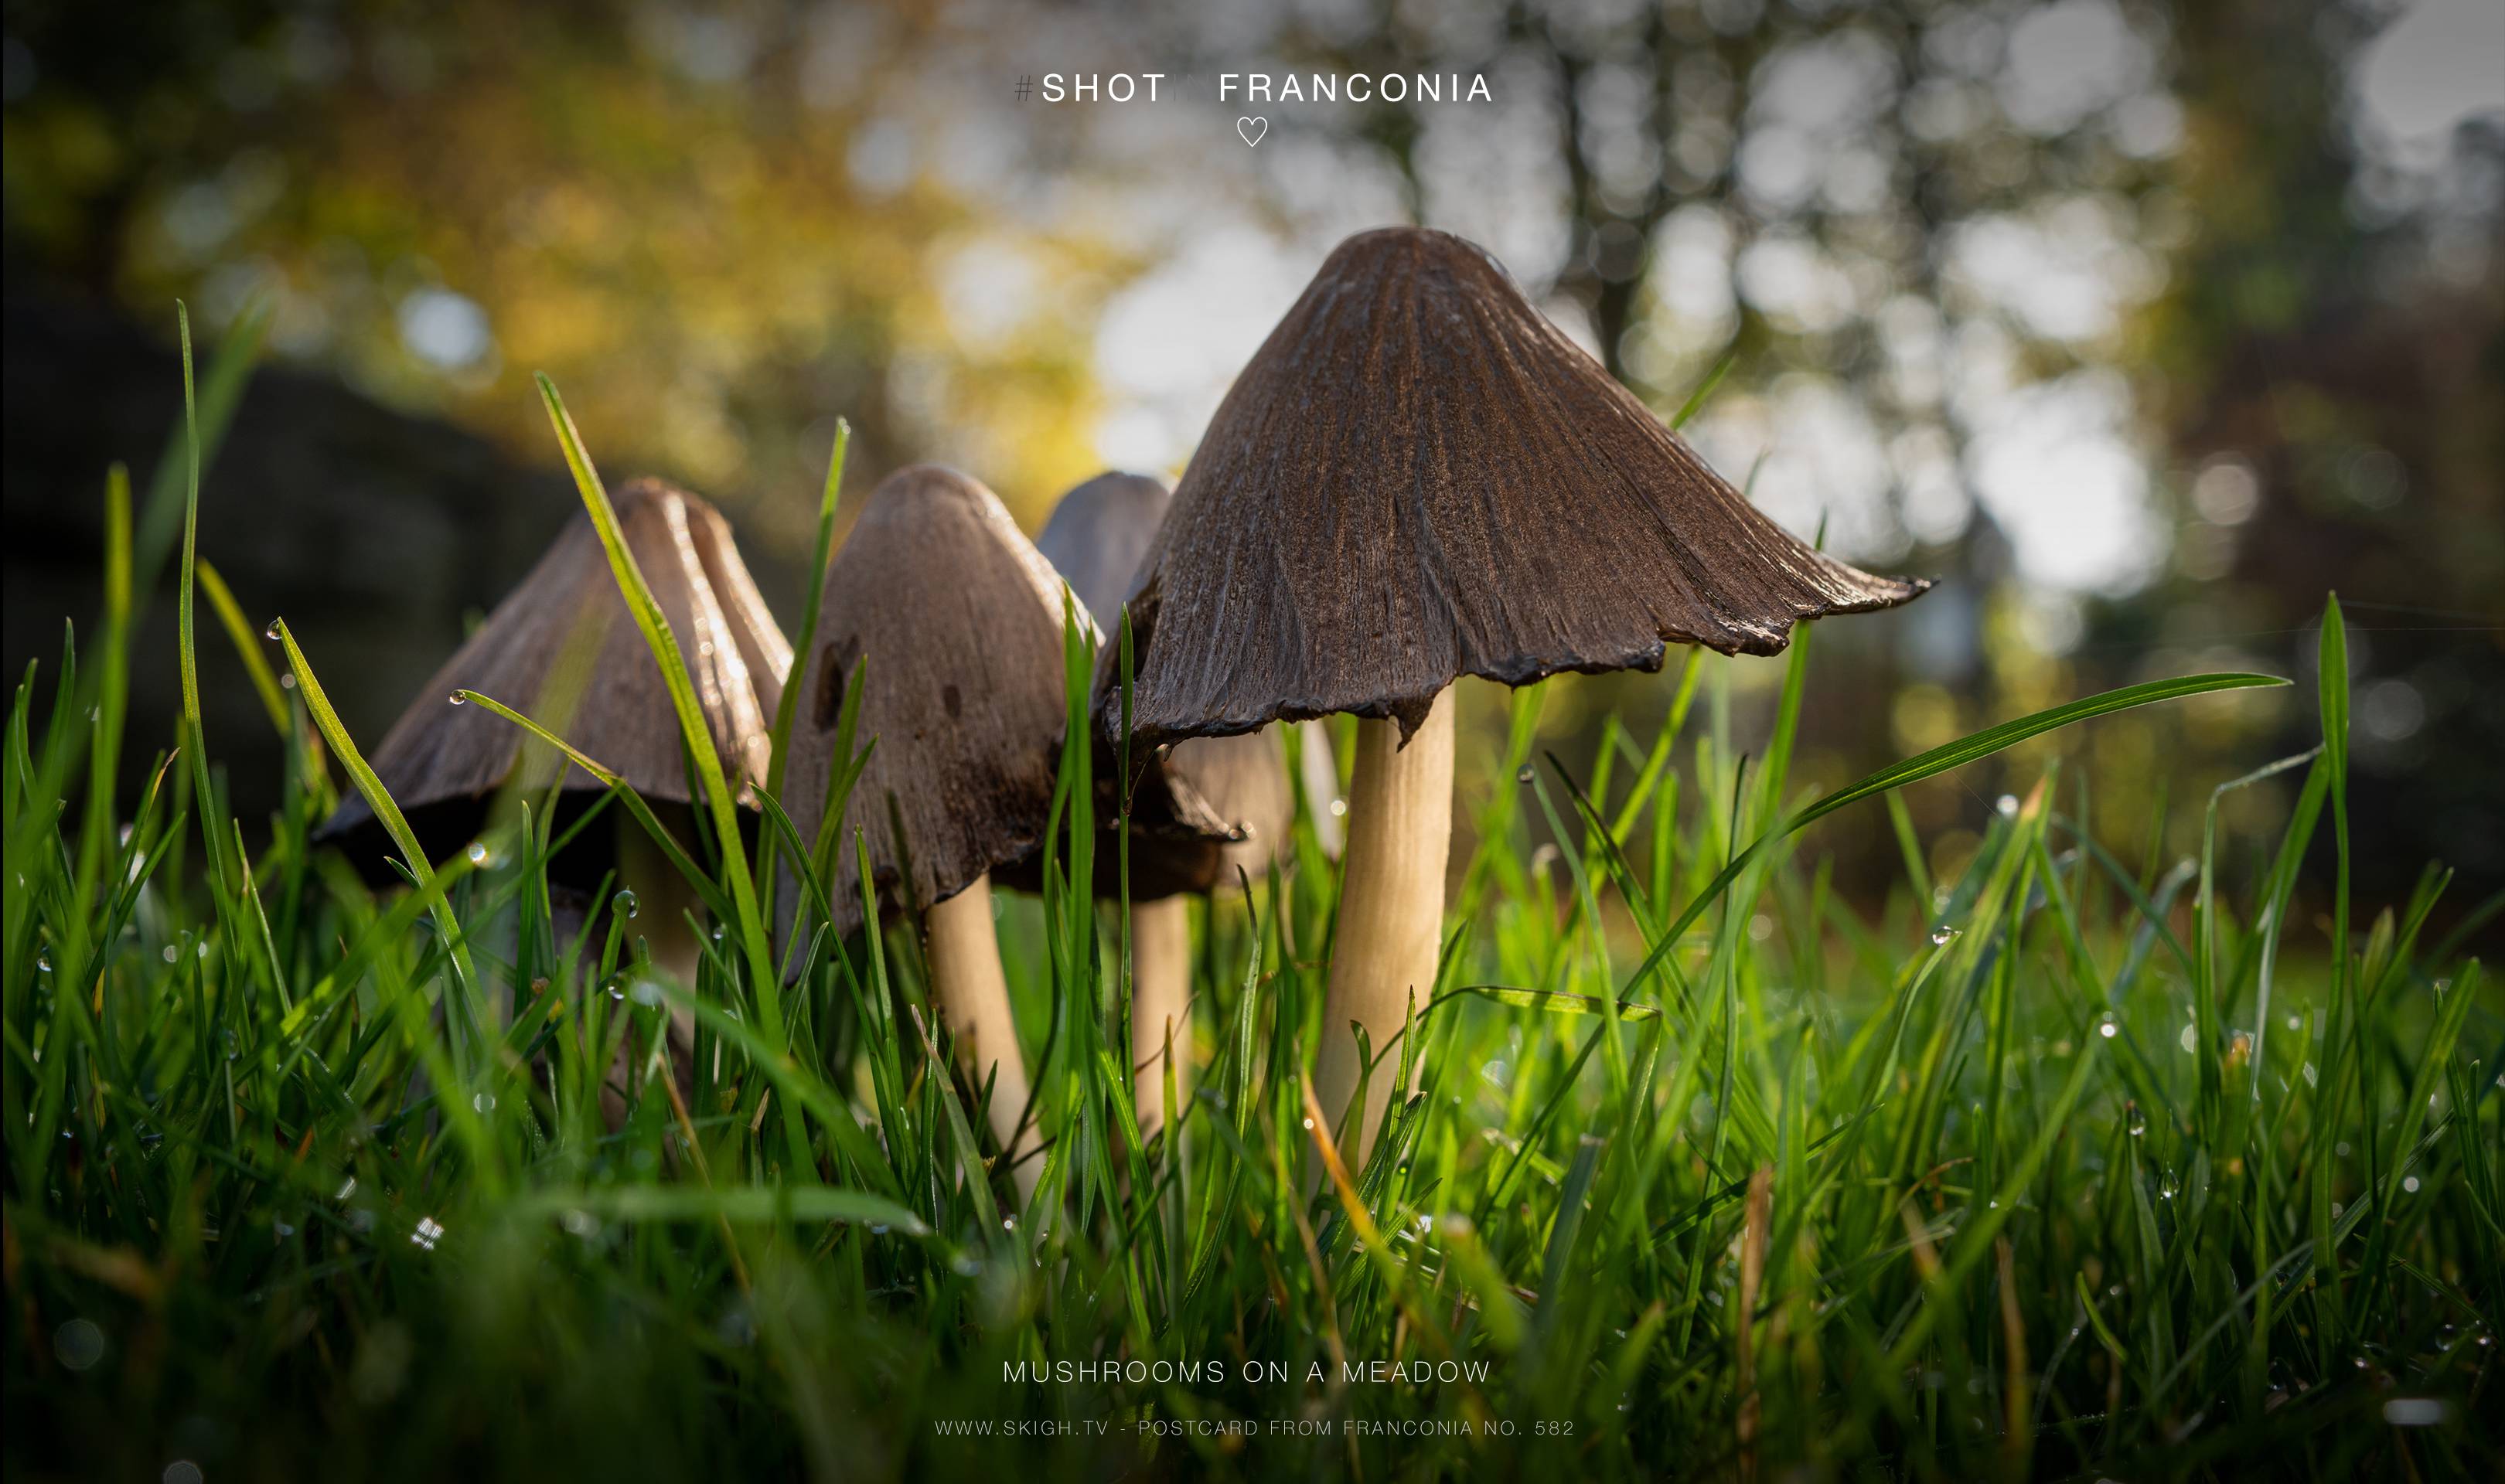 Mushrooms on a meadow